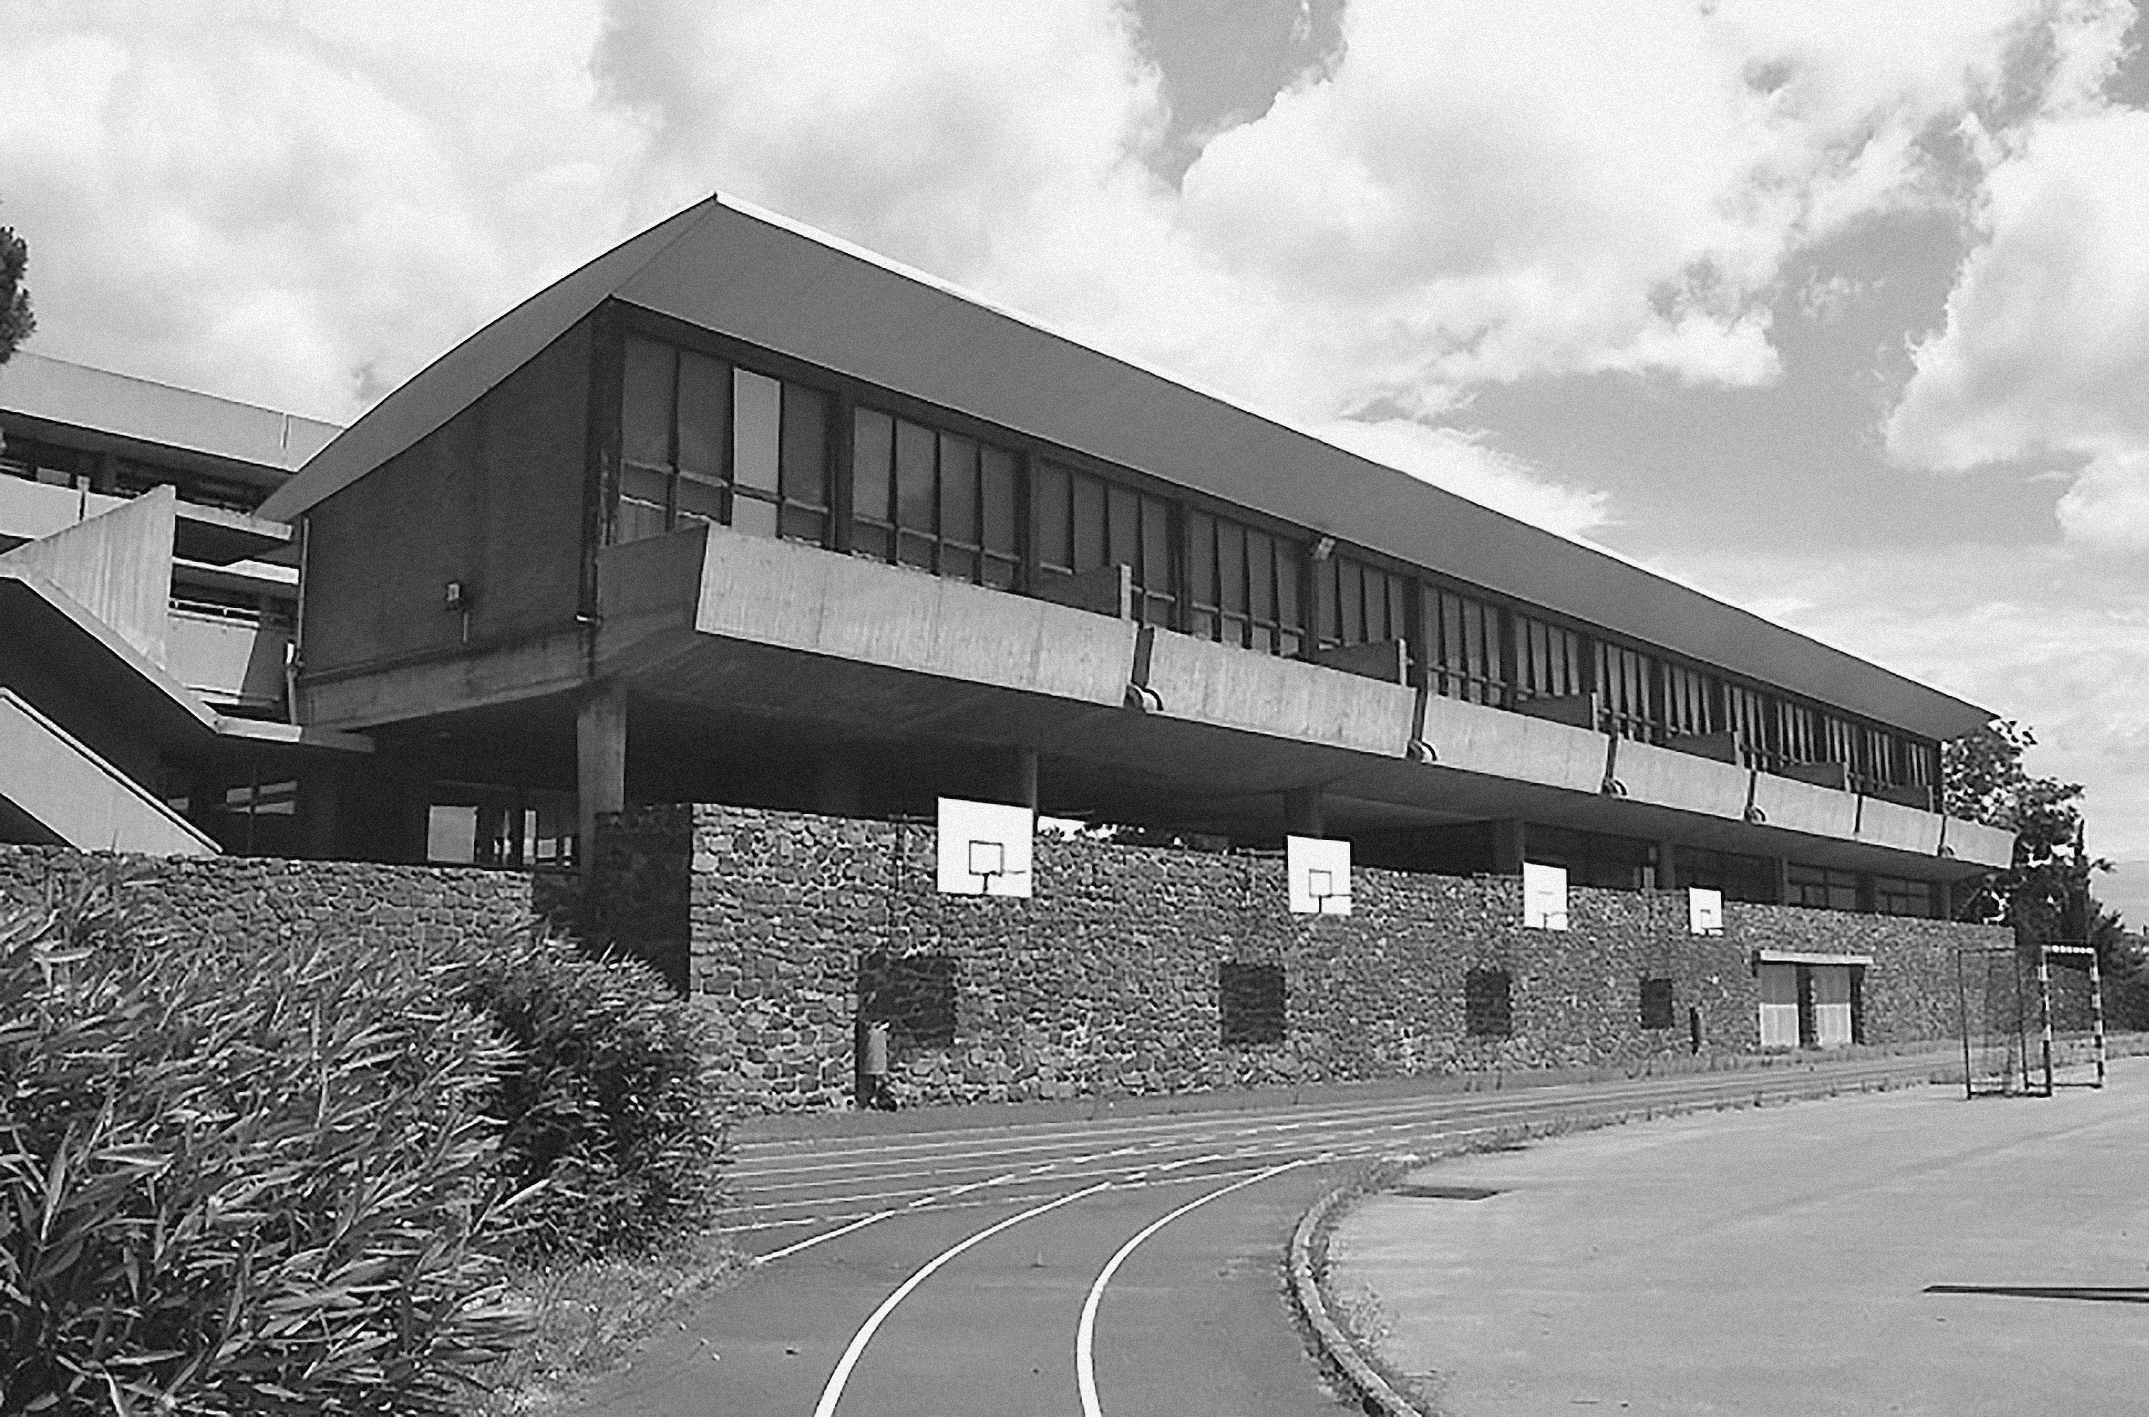 Apprenticeship centre, Béziers, 1956 (P. Jeanneret, D. Escorsa and J. Vauthier-Jeanneret, architects). Metal roof structures and tilting windows by Jean Prouvé.